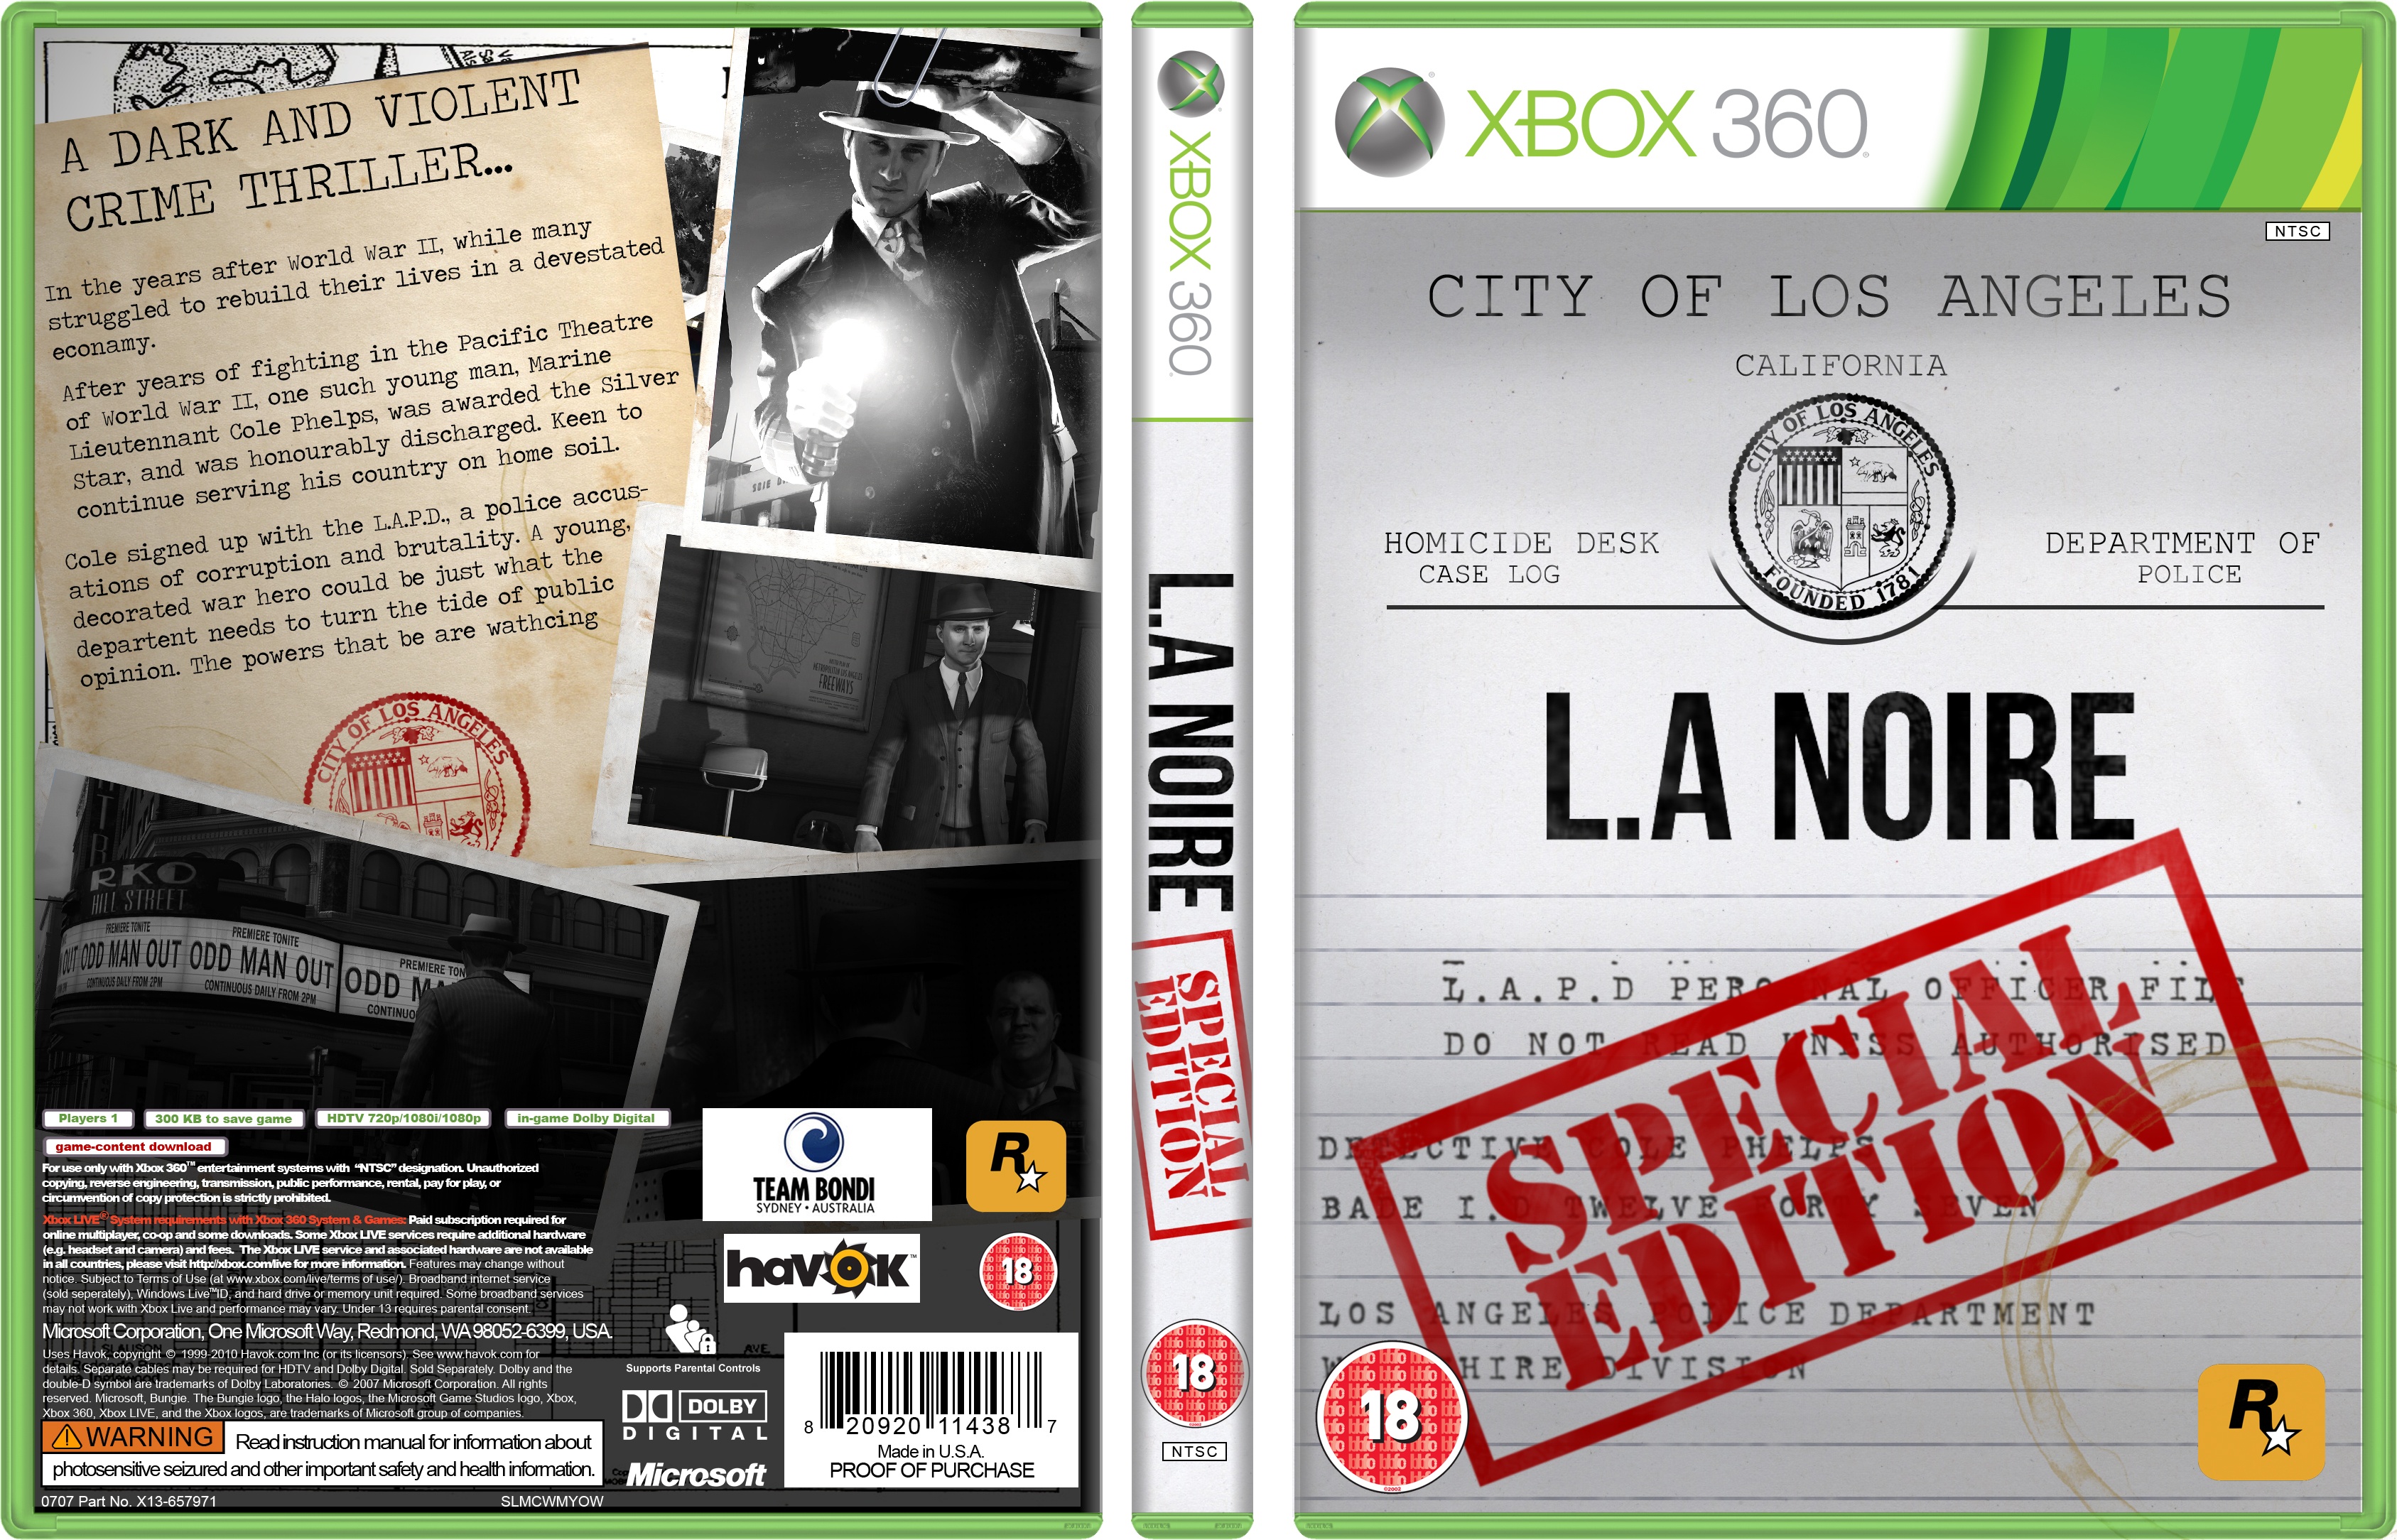 L.A Noire Special Edition box cover